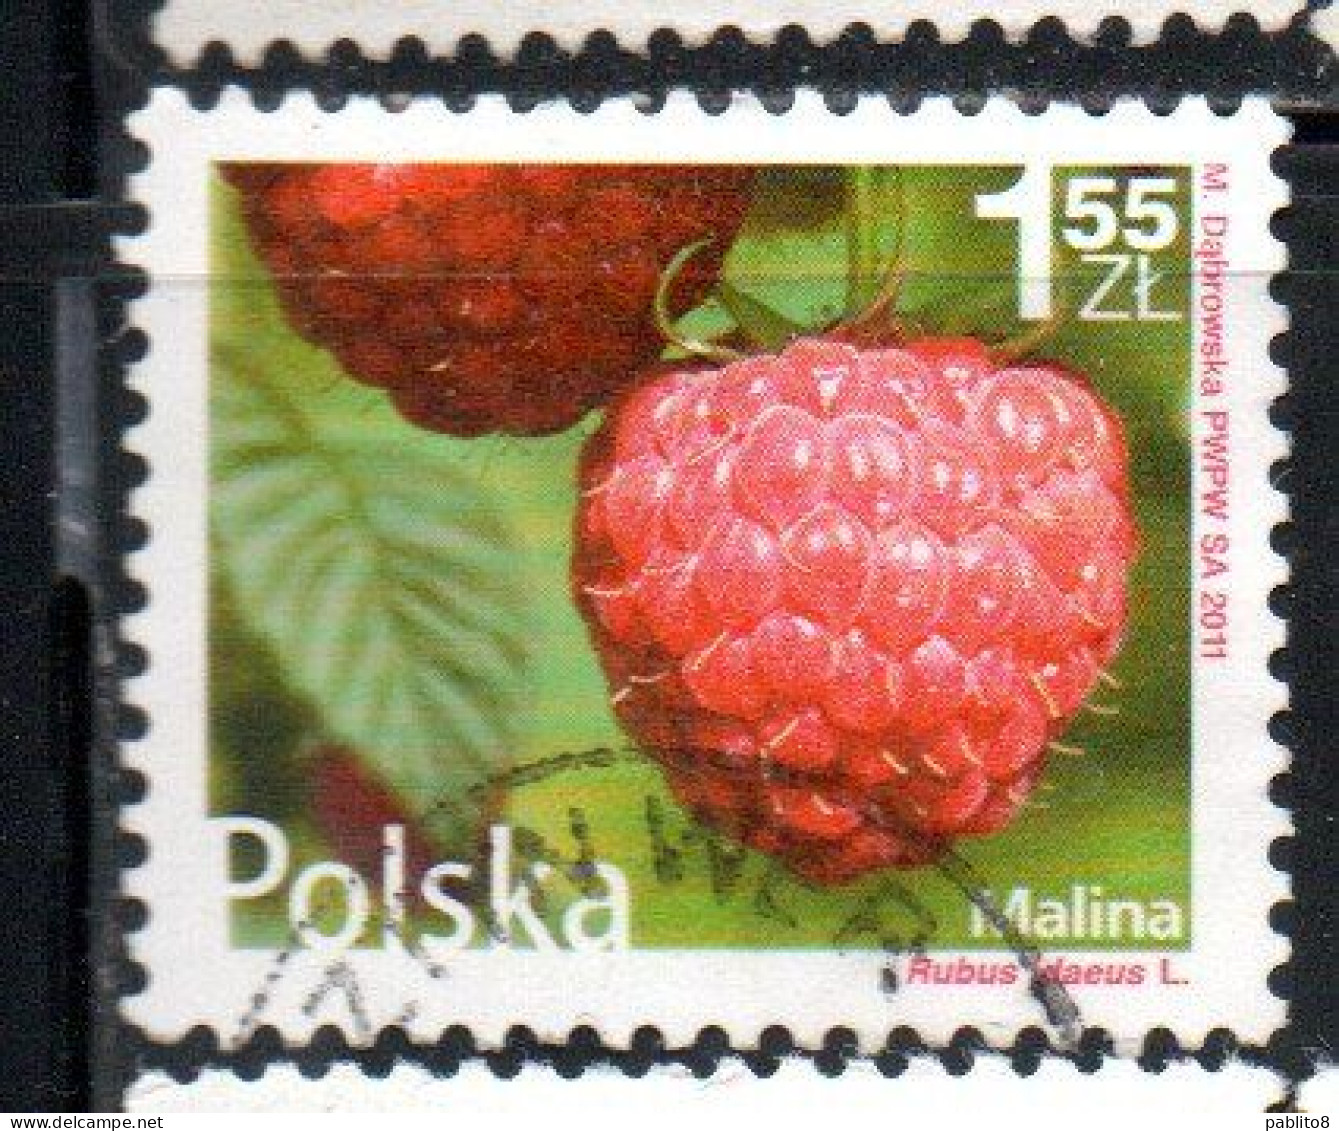 POLONIA POLAND POLSKA 2011 FRUIT AND FLOWERS RUBUS IDAEUS 1.55z USED USATO OBLITERE' - Usati